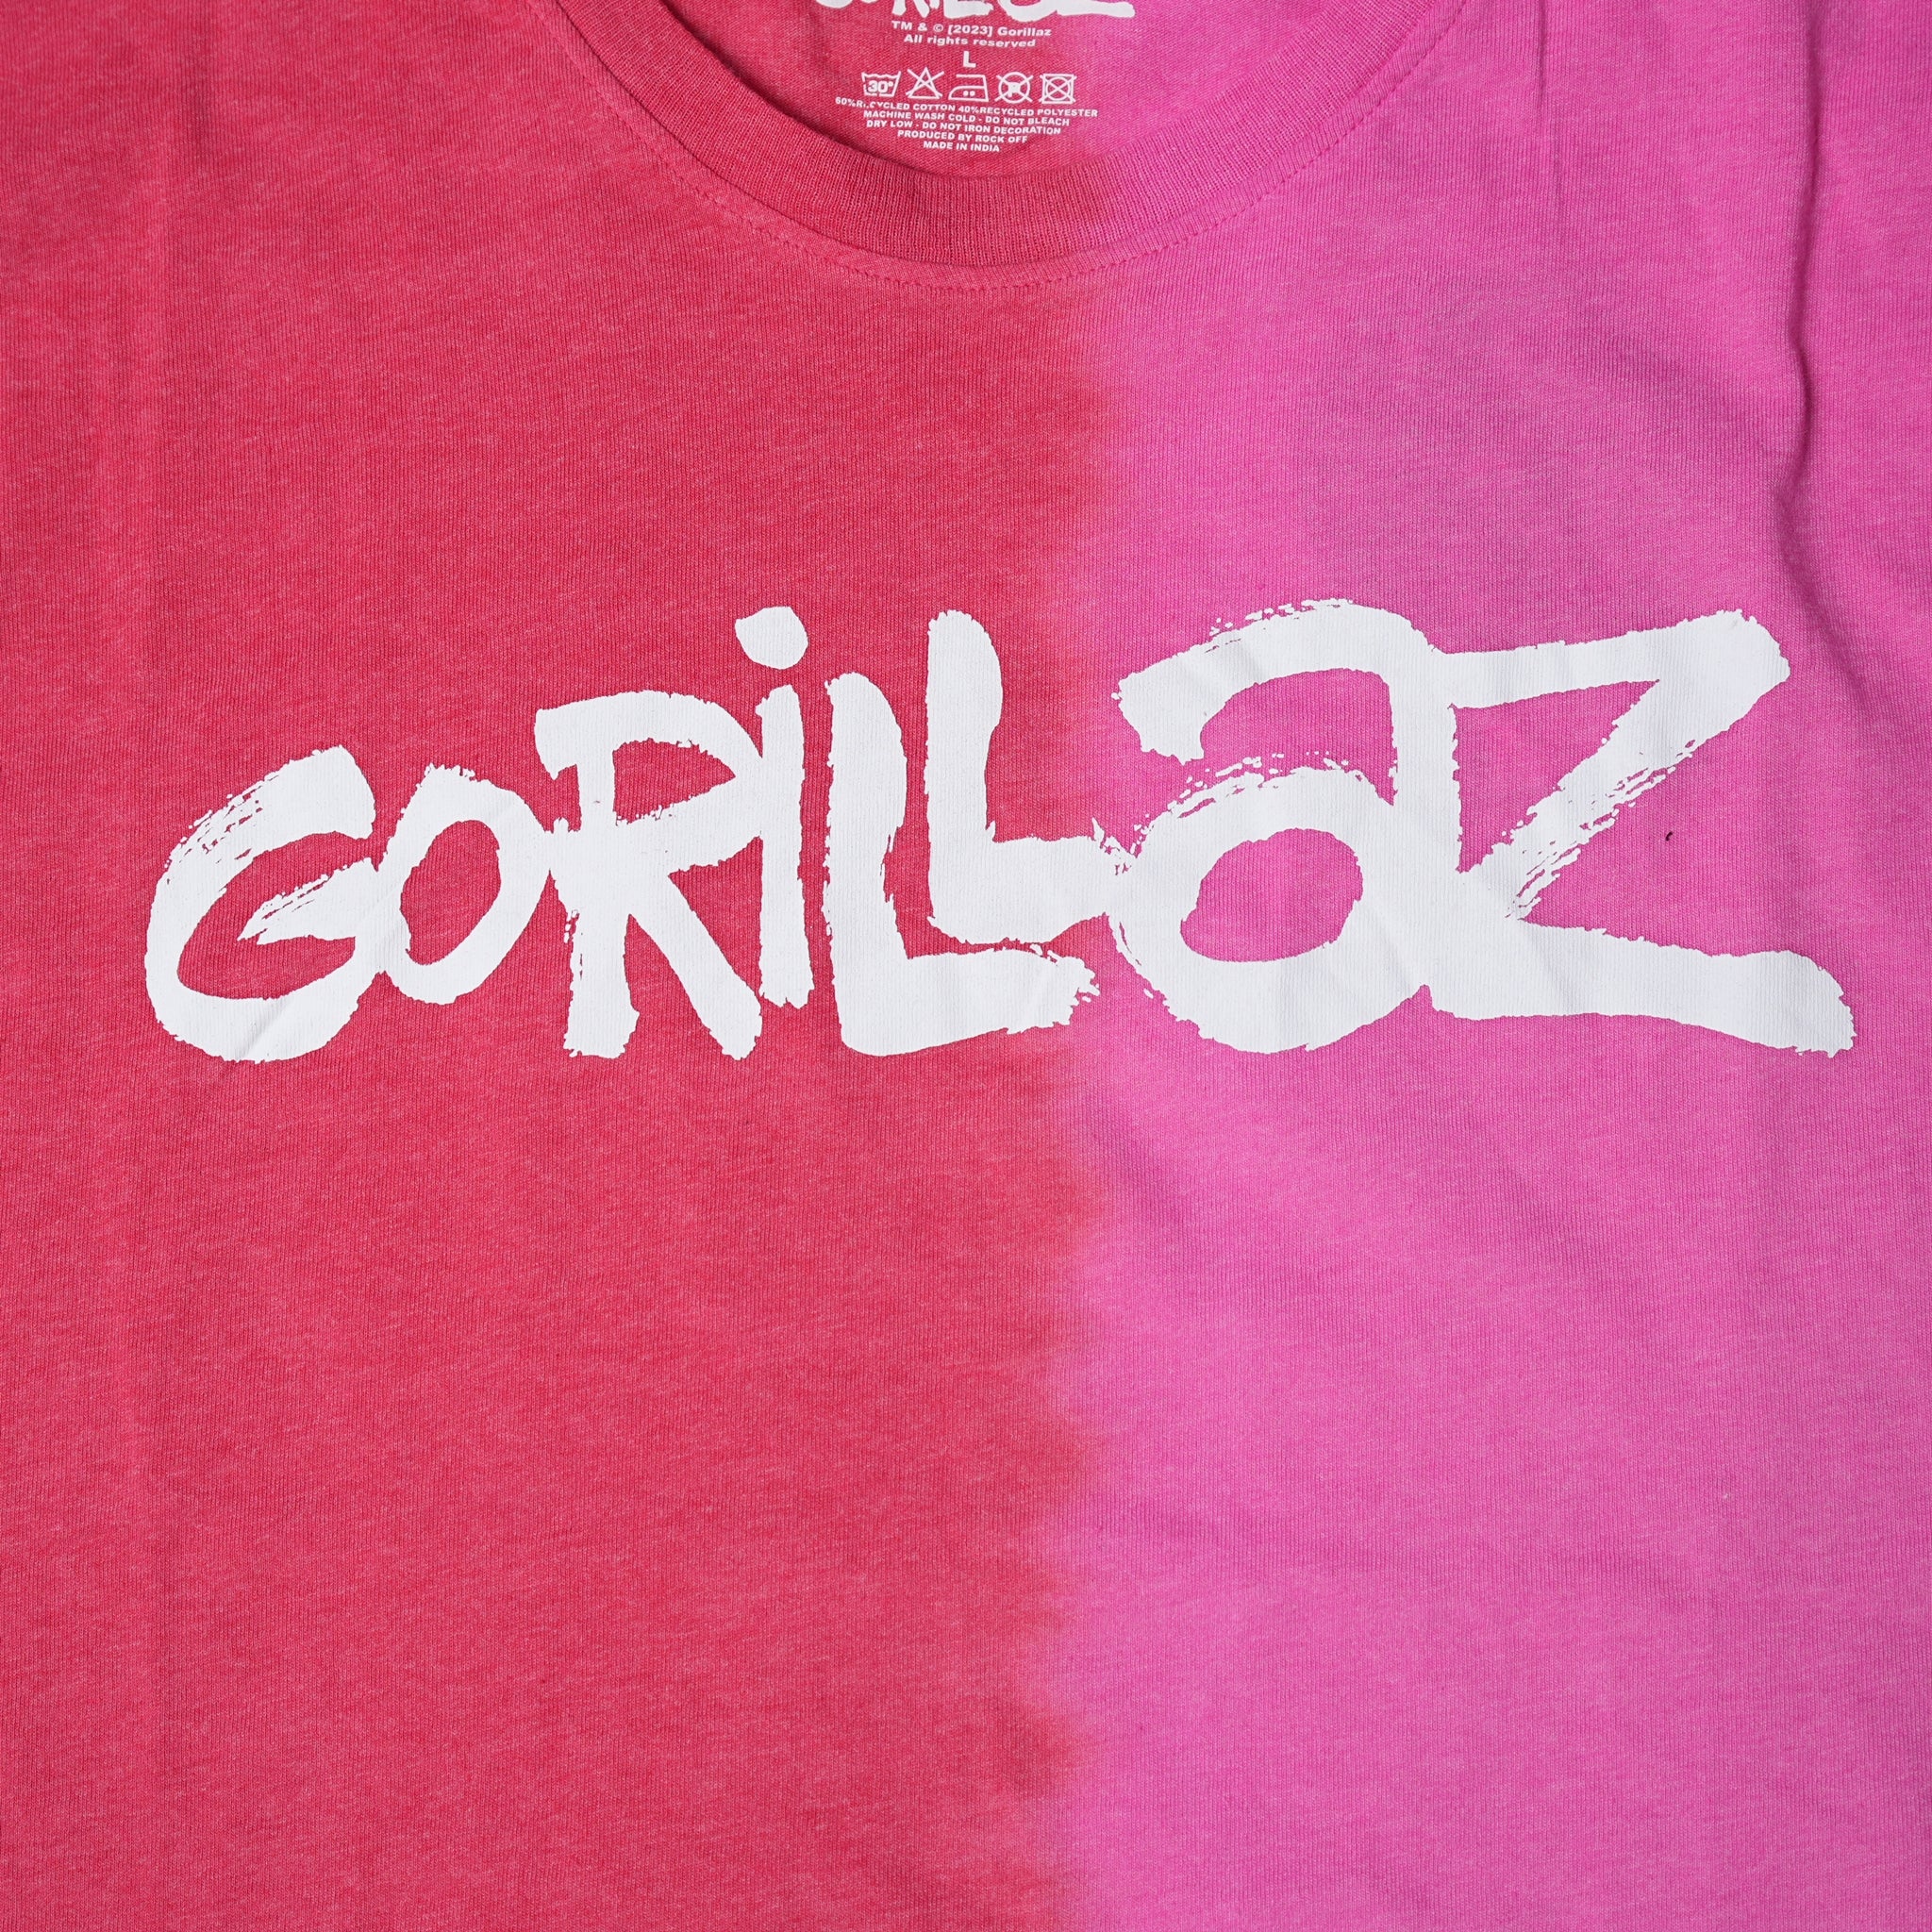 Name:Gorillaz_Two-Tone Brush Logo_Uni_RED_Dip-Dye【ROCK OFF】【ネコポス選択可能】